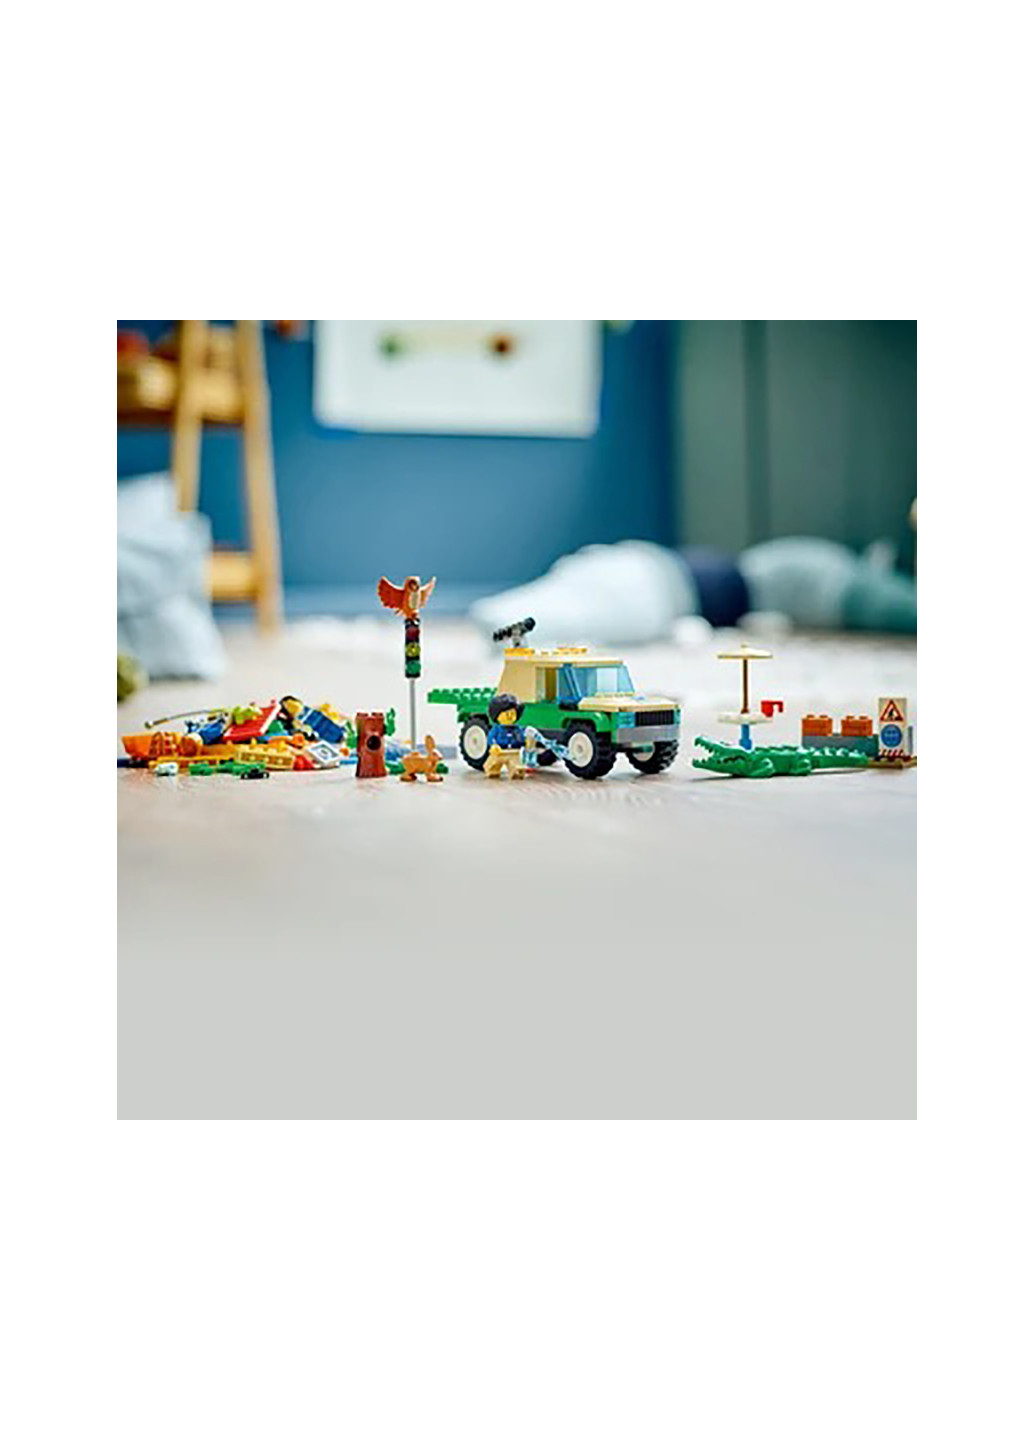 Конструктор City Місії порятунку диких тварин 60353 Lego (257877726)